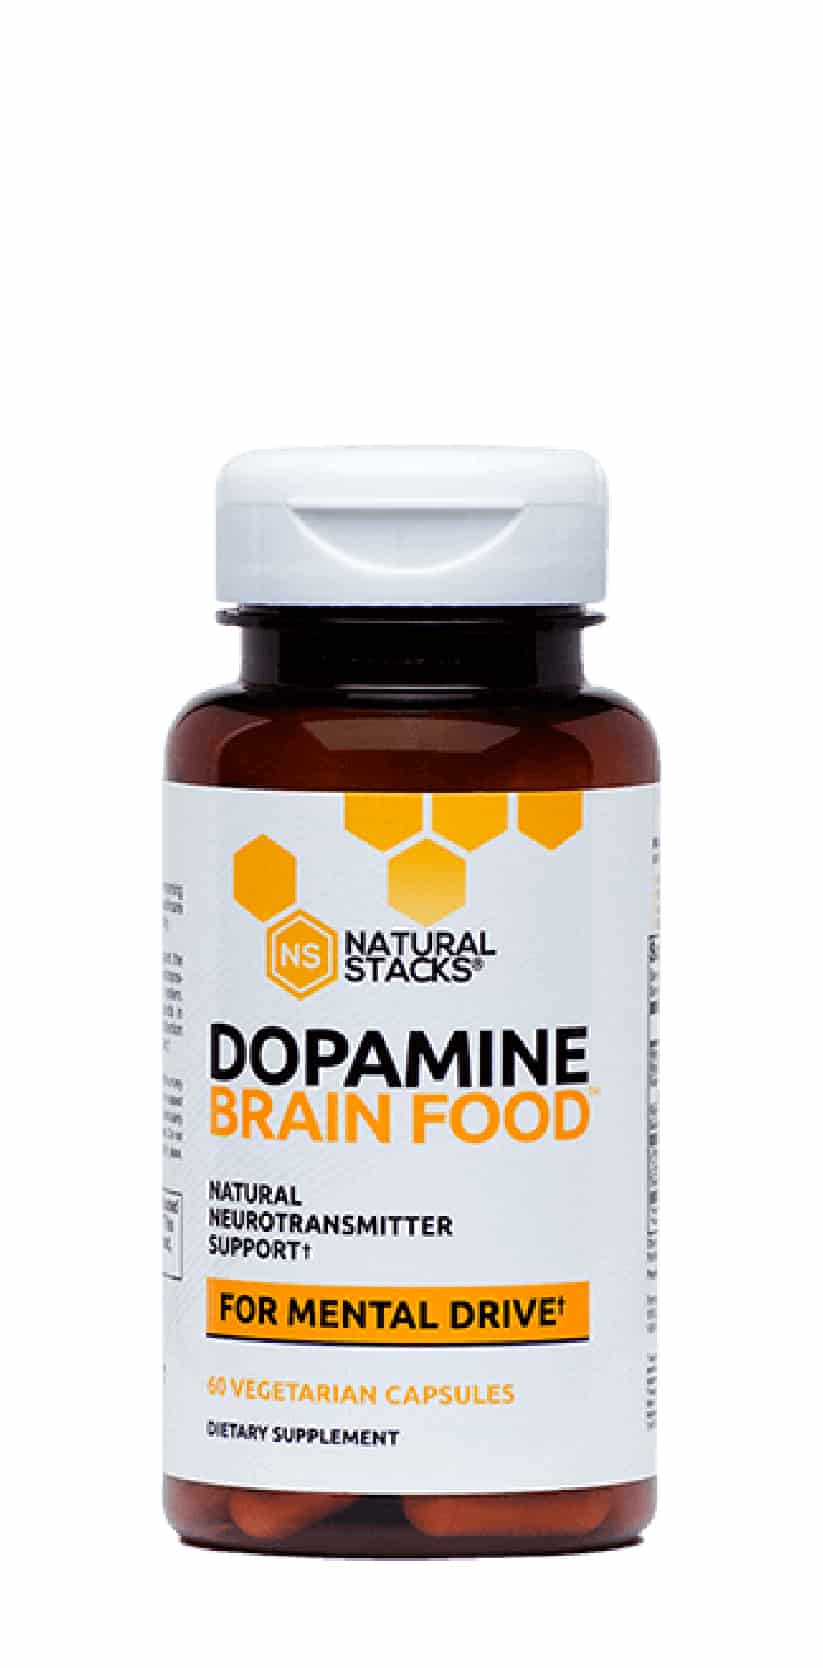 Buy Natural Stacks Dopamine Brain Food at LiveHelfi